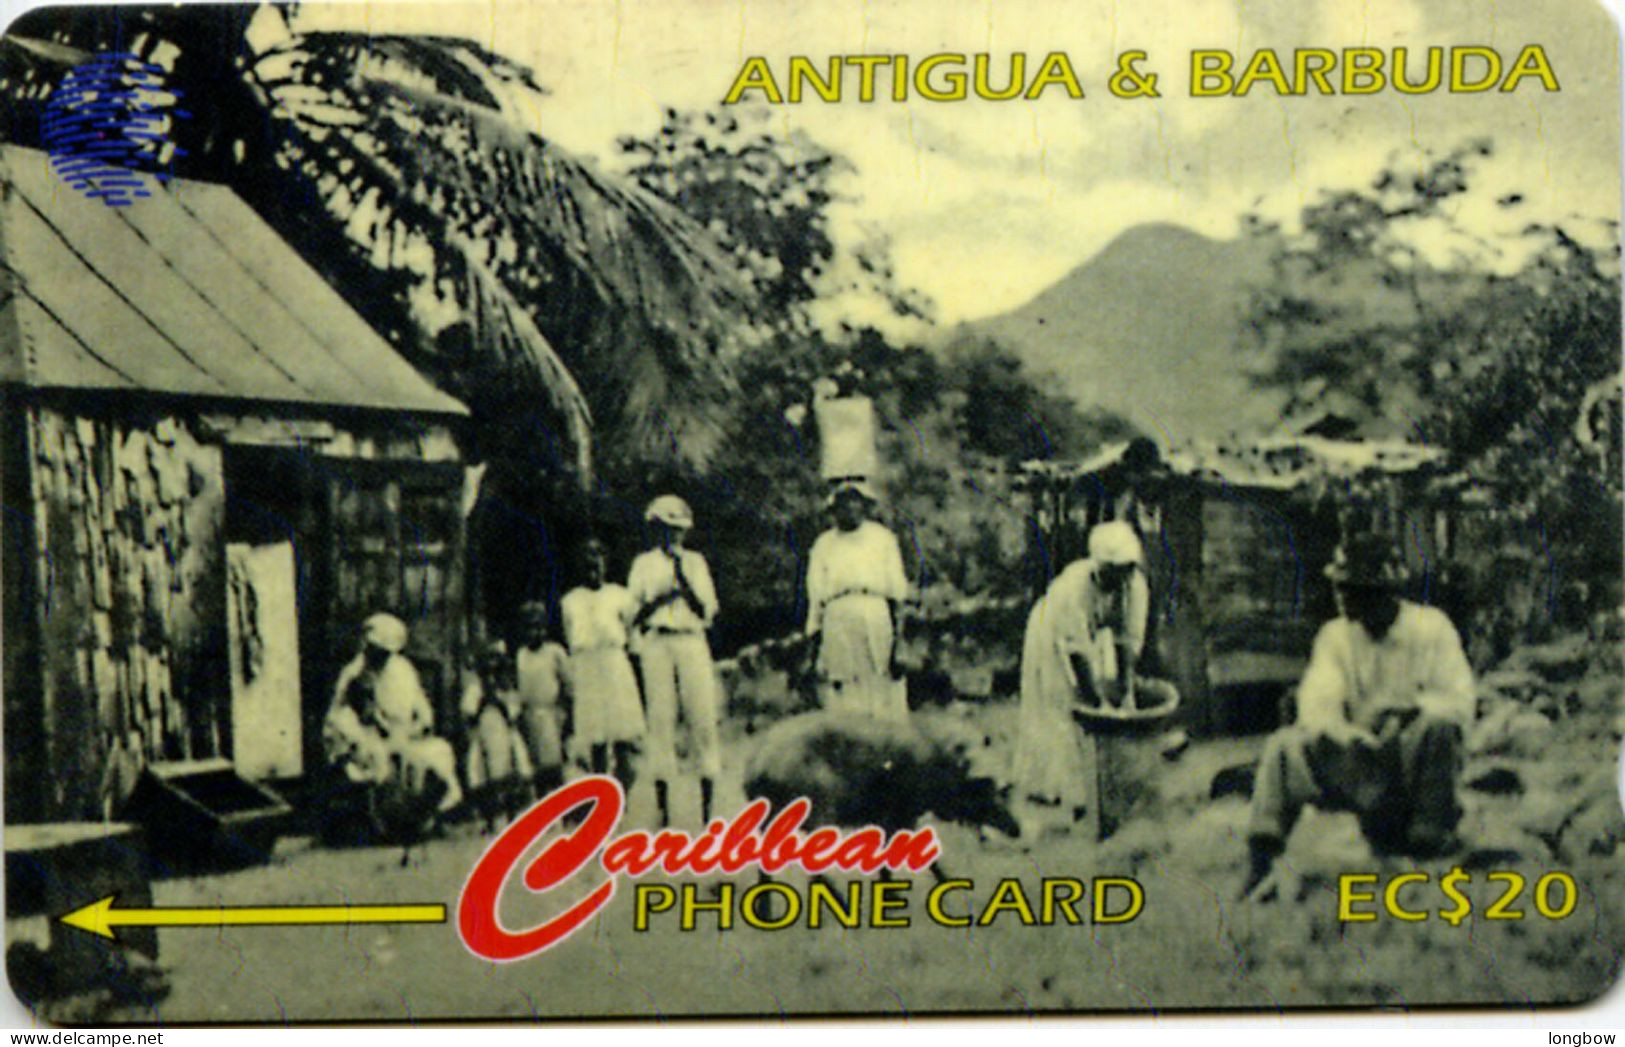 ANTIGUA & BARBUDA-  54CATC-RURAL ANTIGUANA FAMILY - Antigua And Barbuda